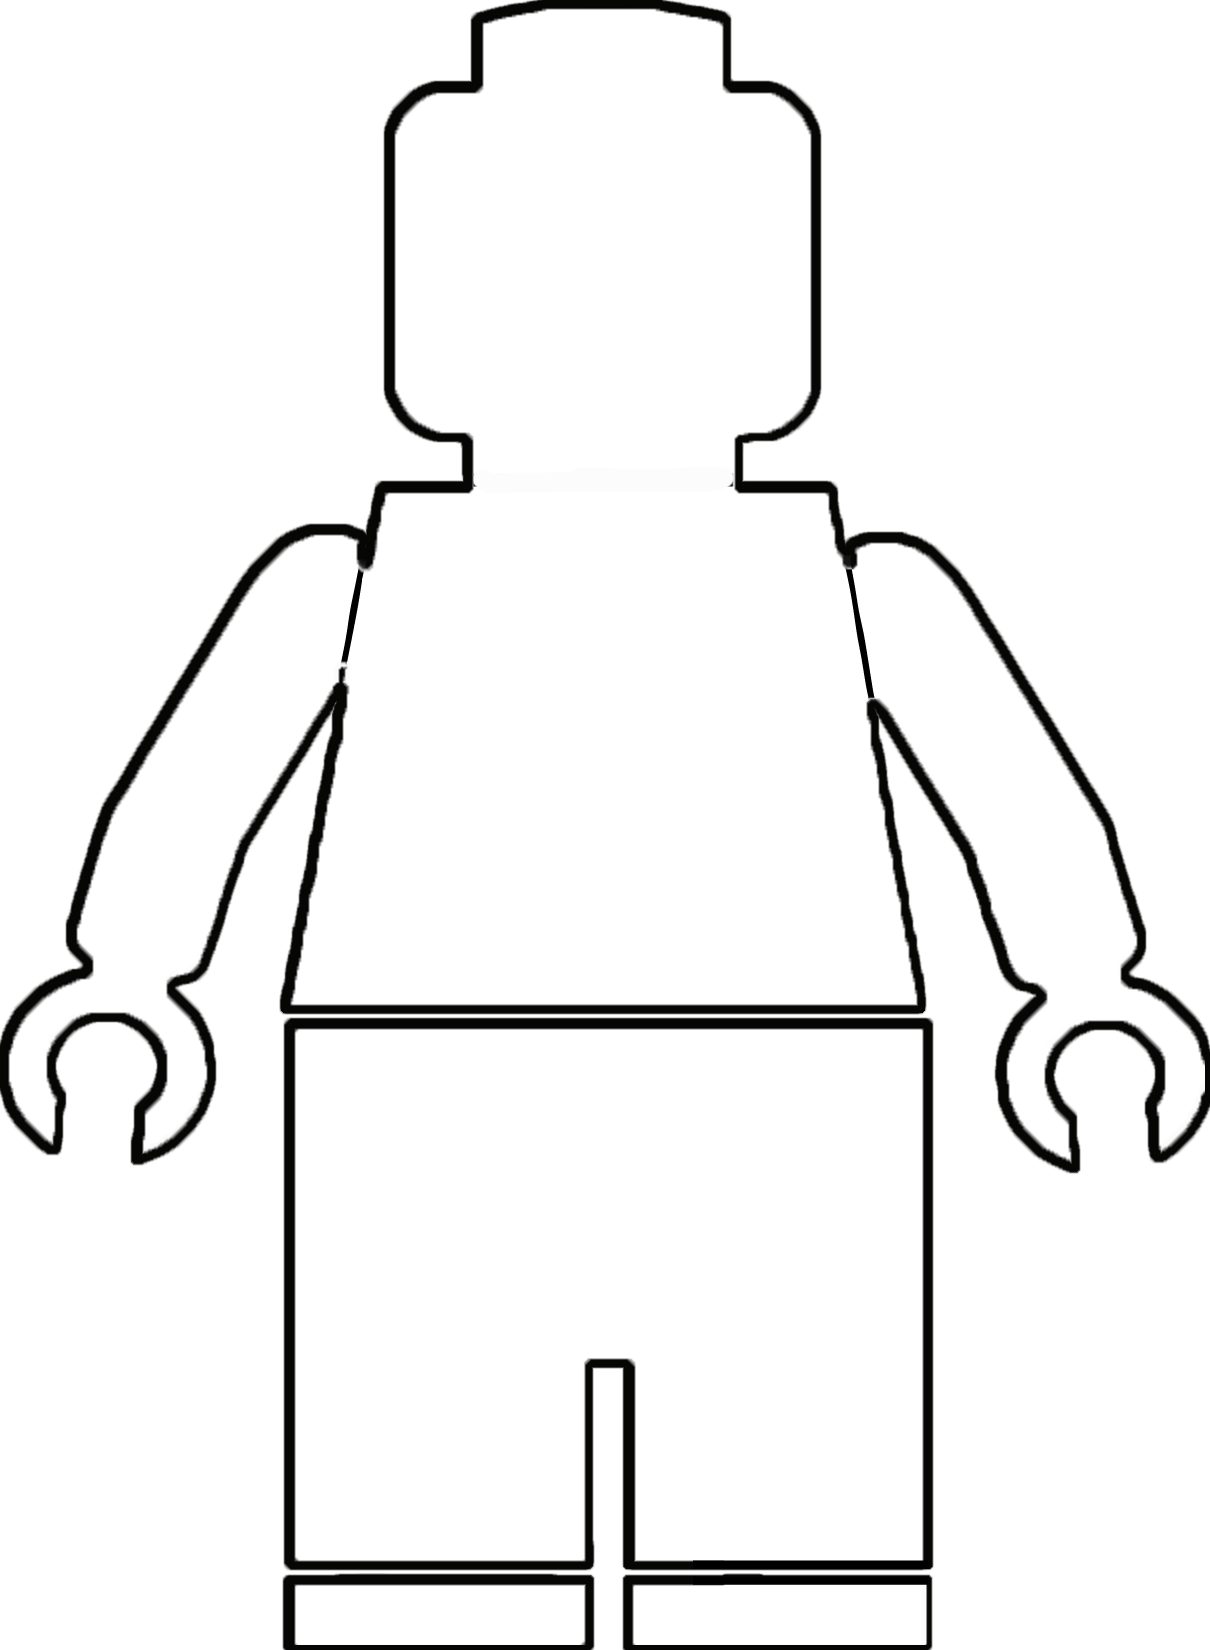 Lego Man The Nifty Nerd Legoman - Lego Cake Template (1210x1650)